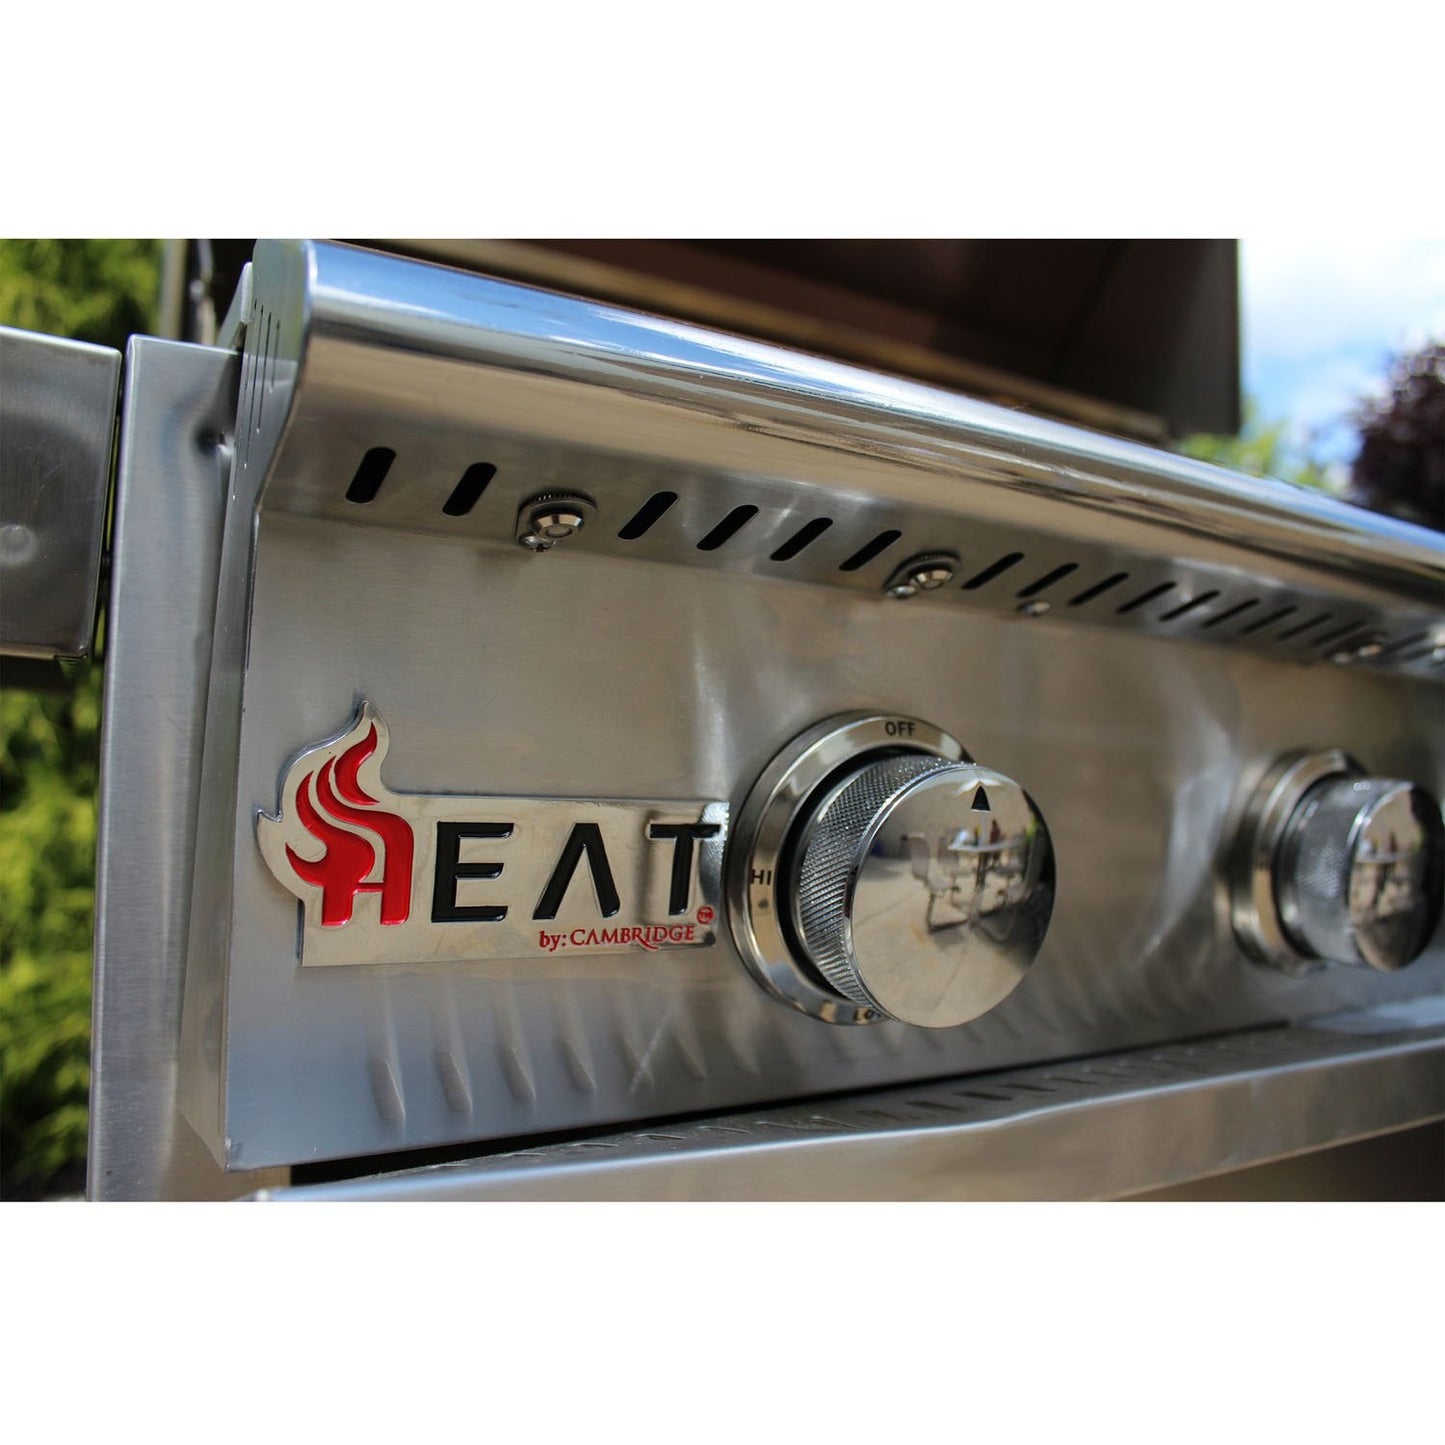 Heat 32-Inch 4-Burner HTS-432-LP Propane Built-in Grill - M&K Grills